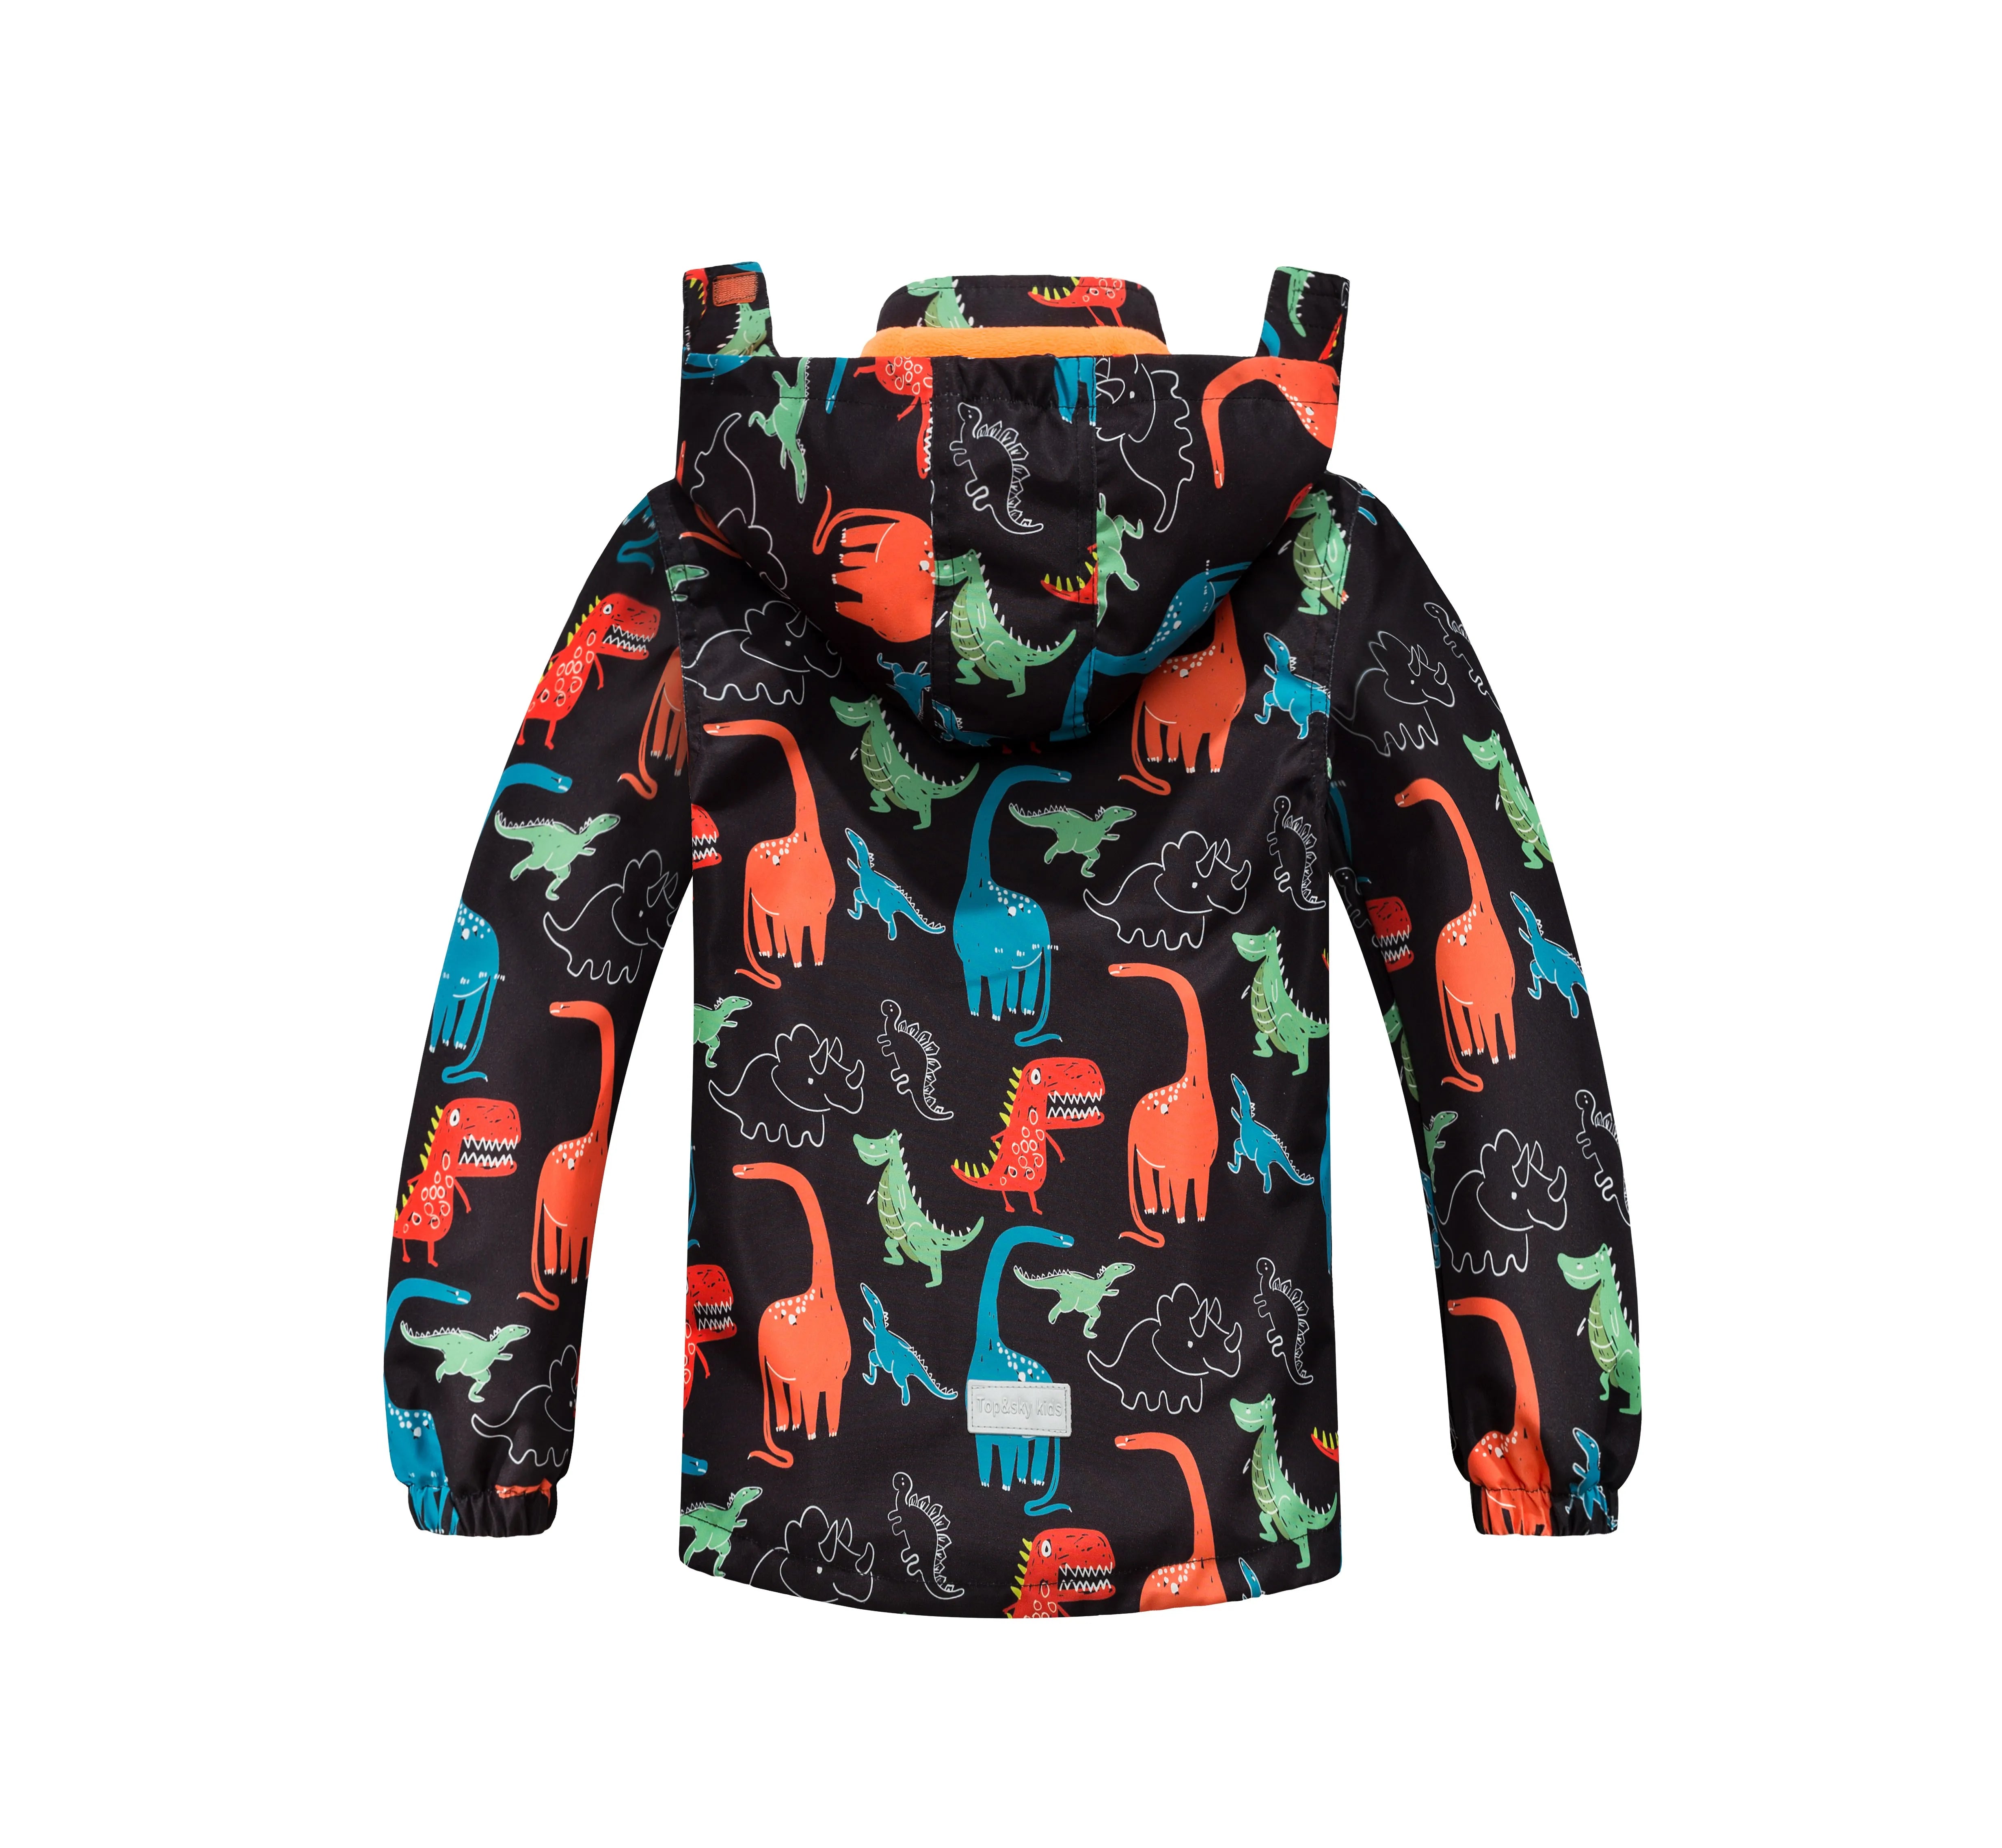 Boys Dinosaur Rain Jackets with Removable Hood Lightweight Waterproof Insulation Warm Windbreakers Raincoats